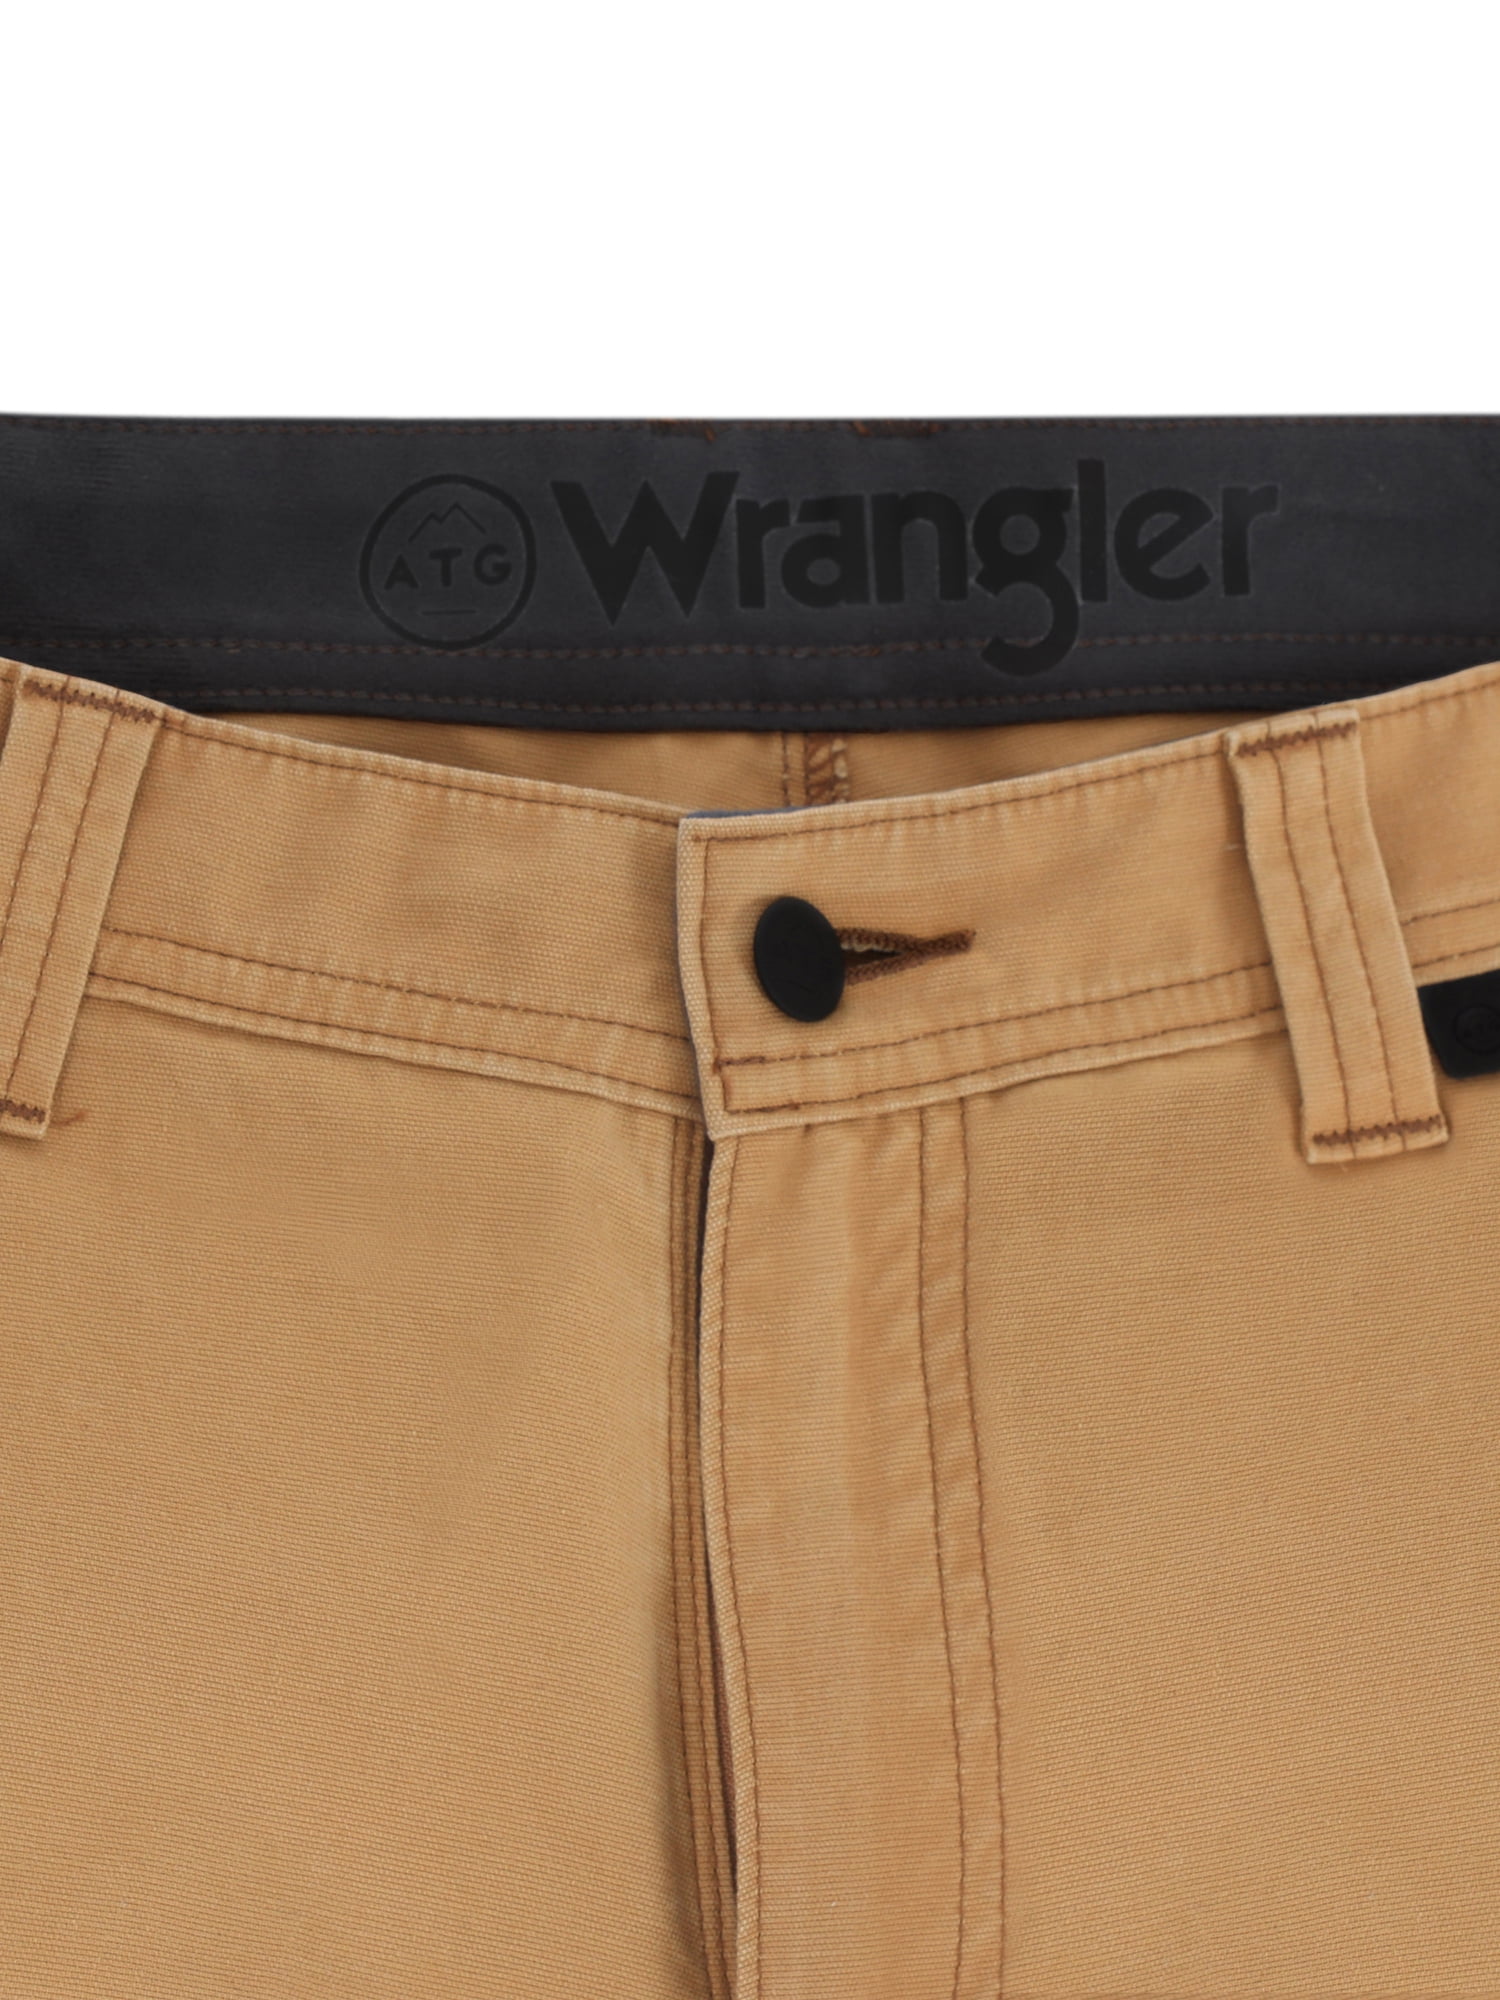 Wrangler Men's Outdoor Rugged Utility Pant 